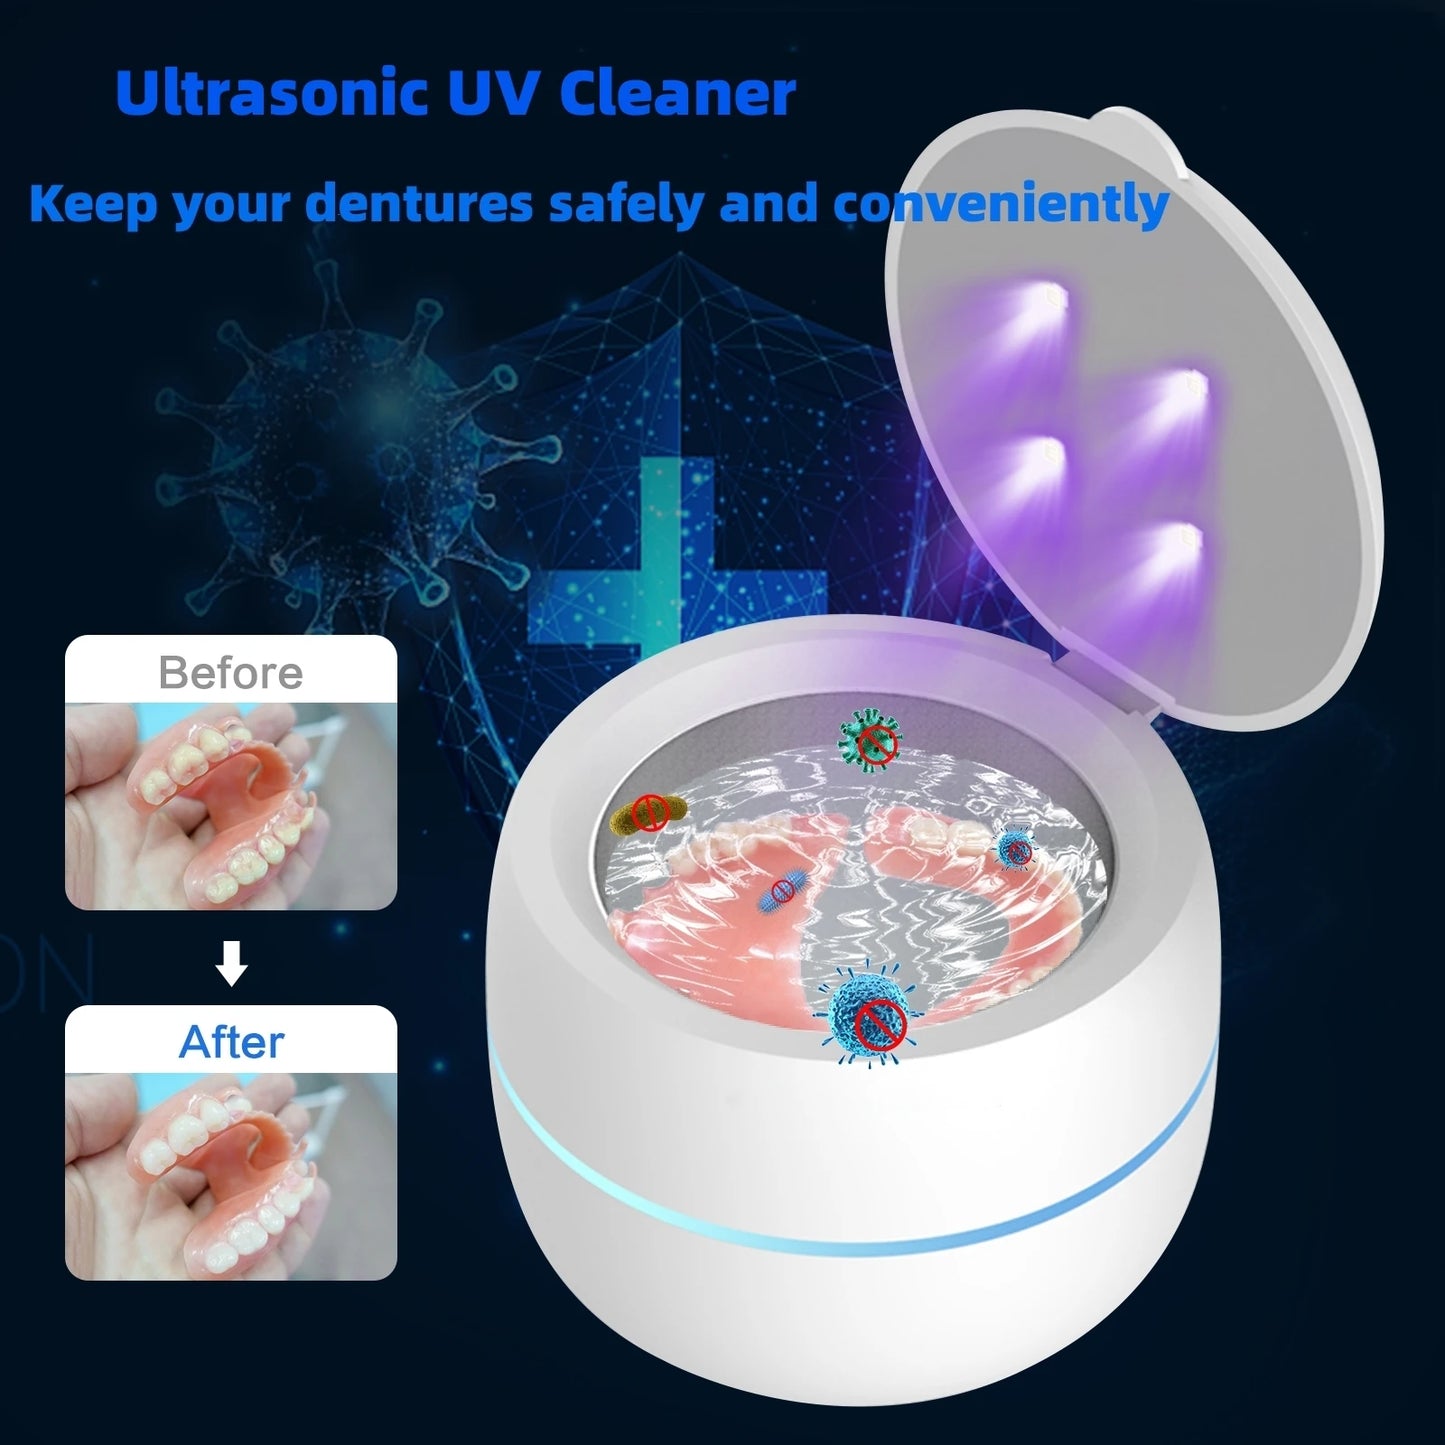 Ultrasonic UV Denture Cleaner
Jewelry Cleaning Kit
False Teeth Aligner Retainer Cleaner